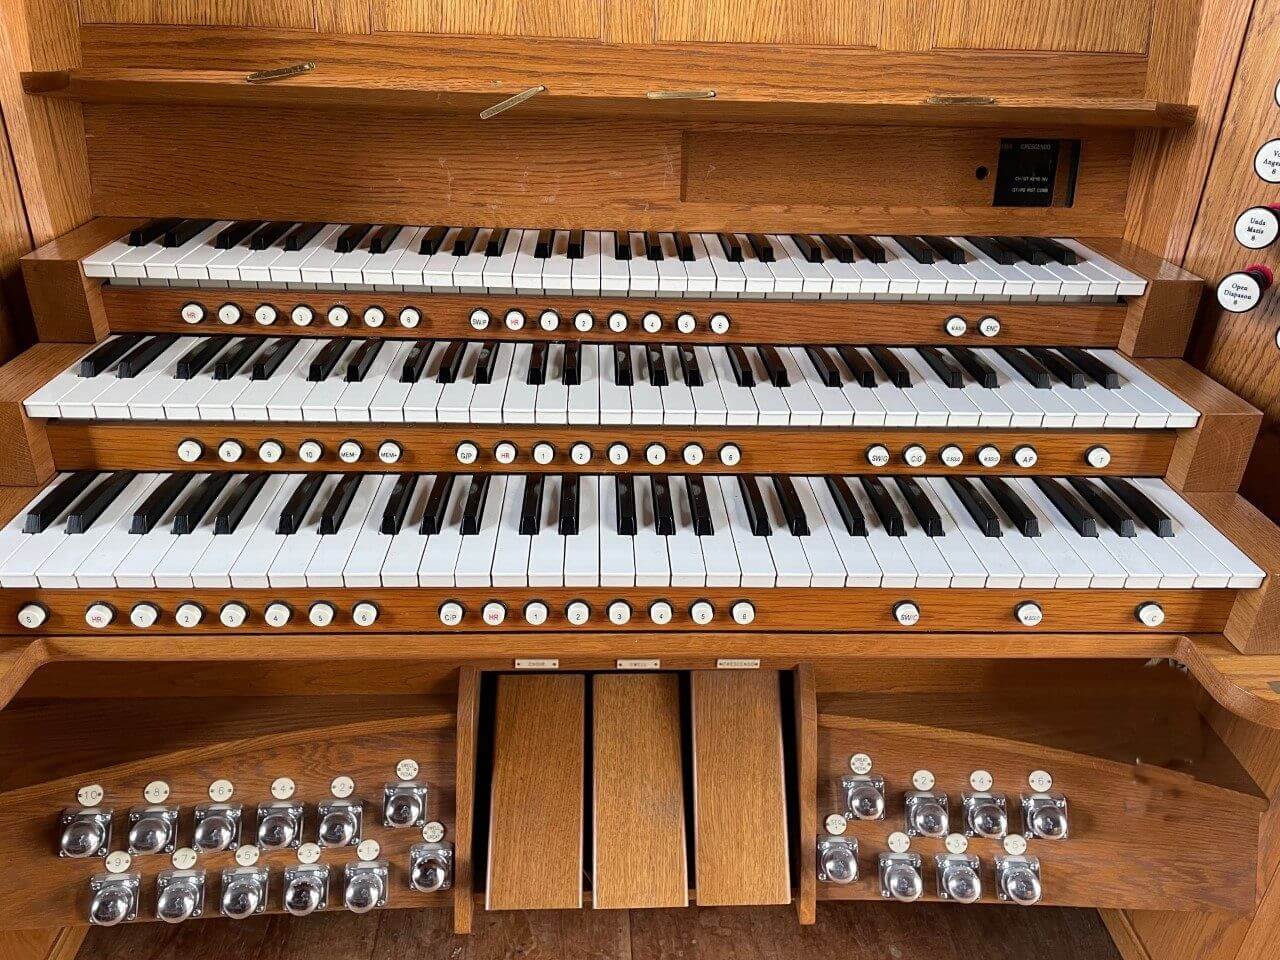 Regent Classic Used Organ keyboard